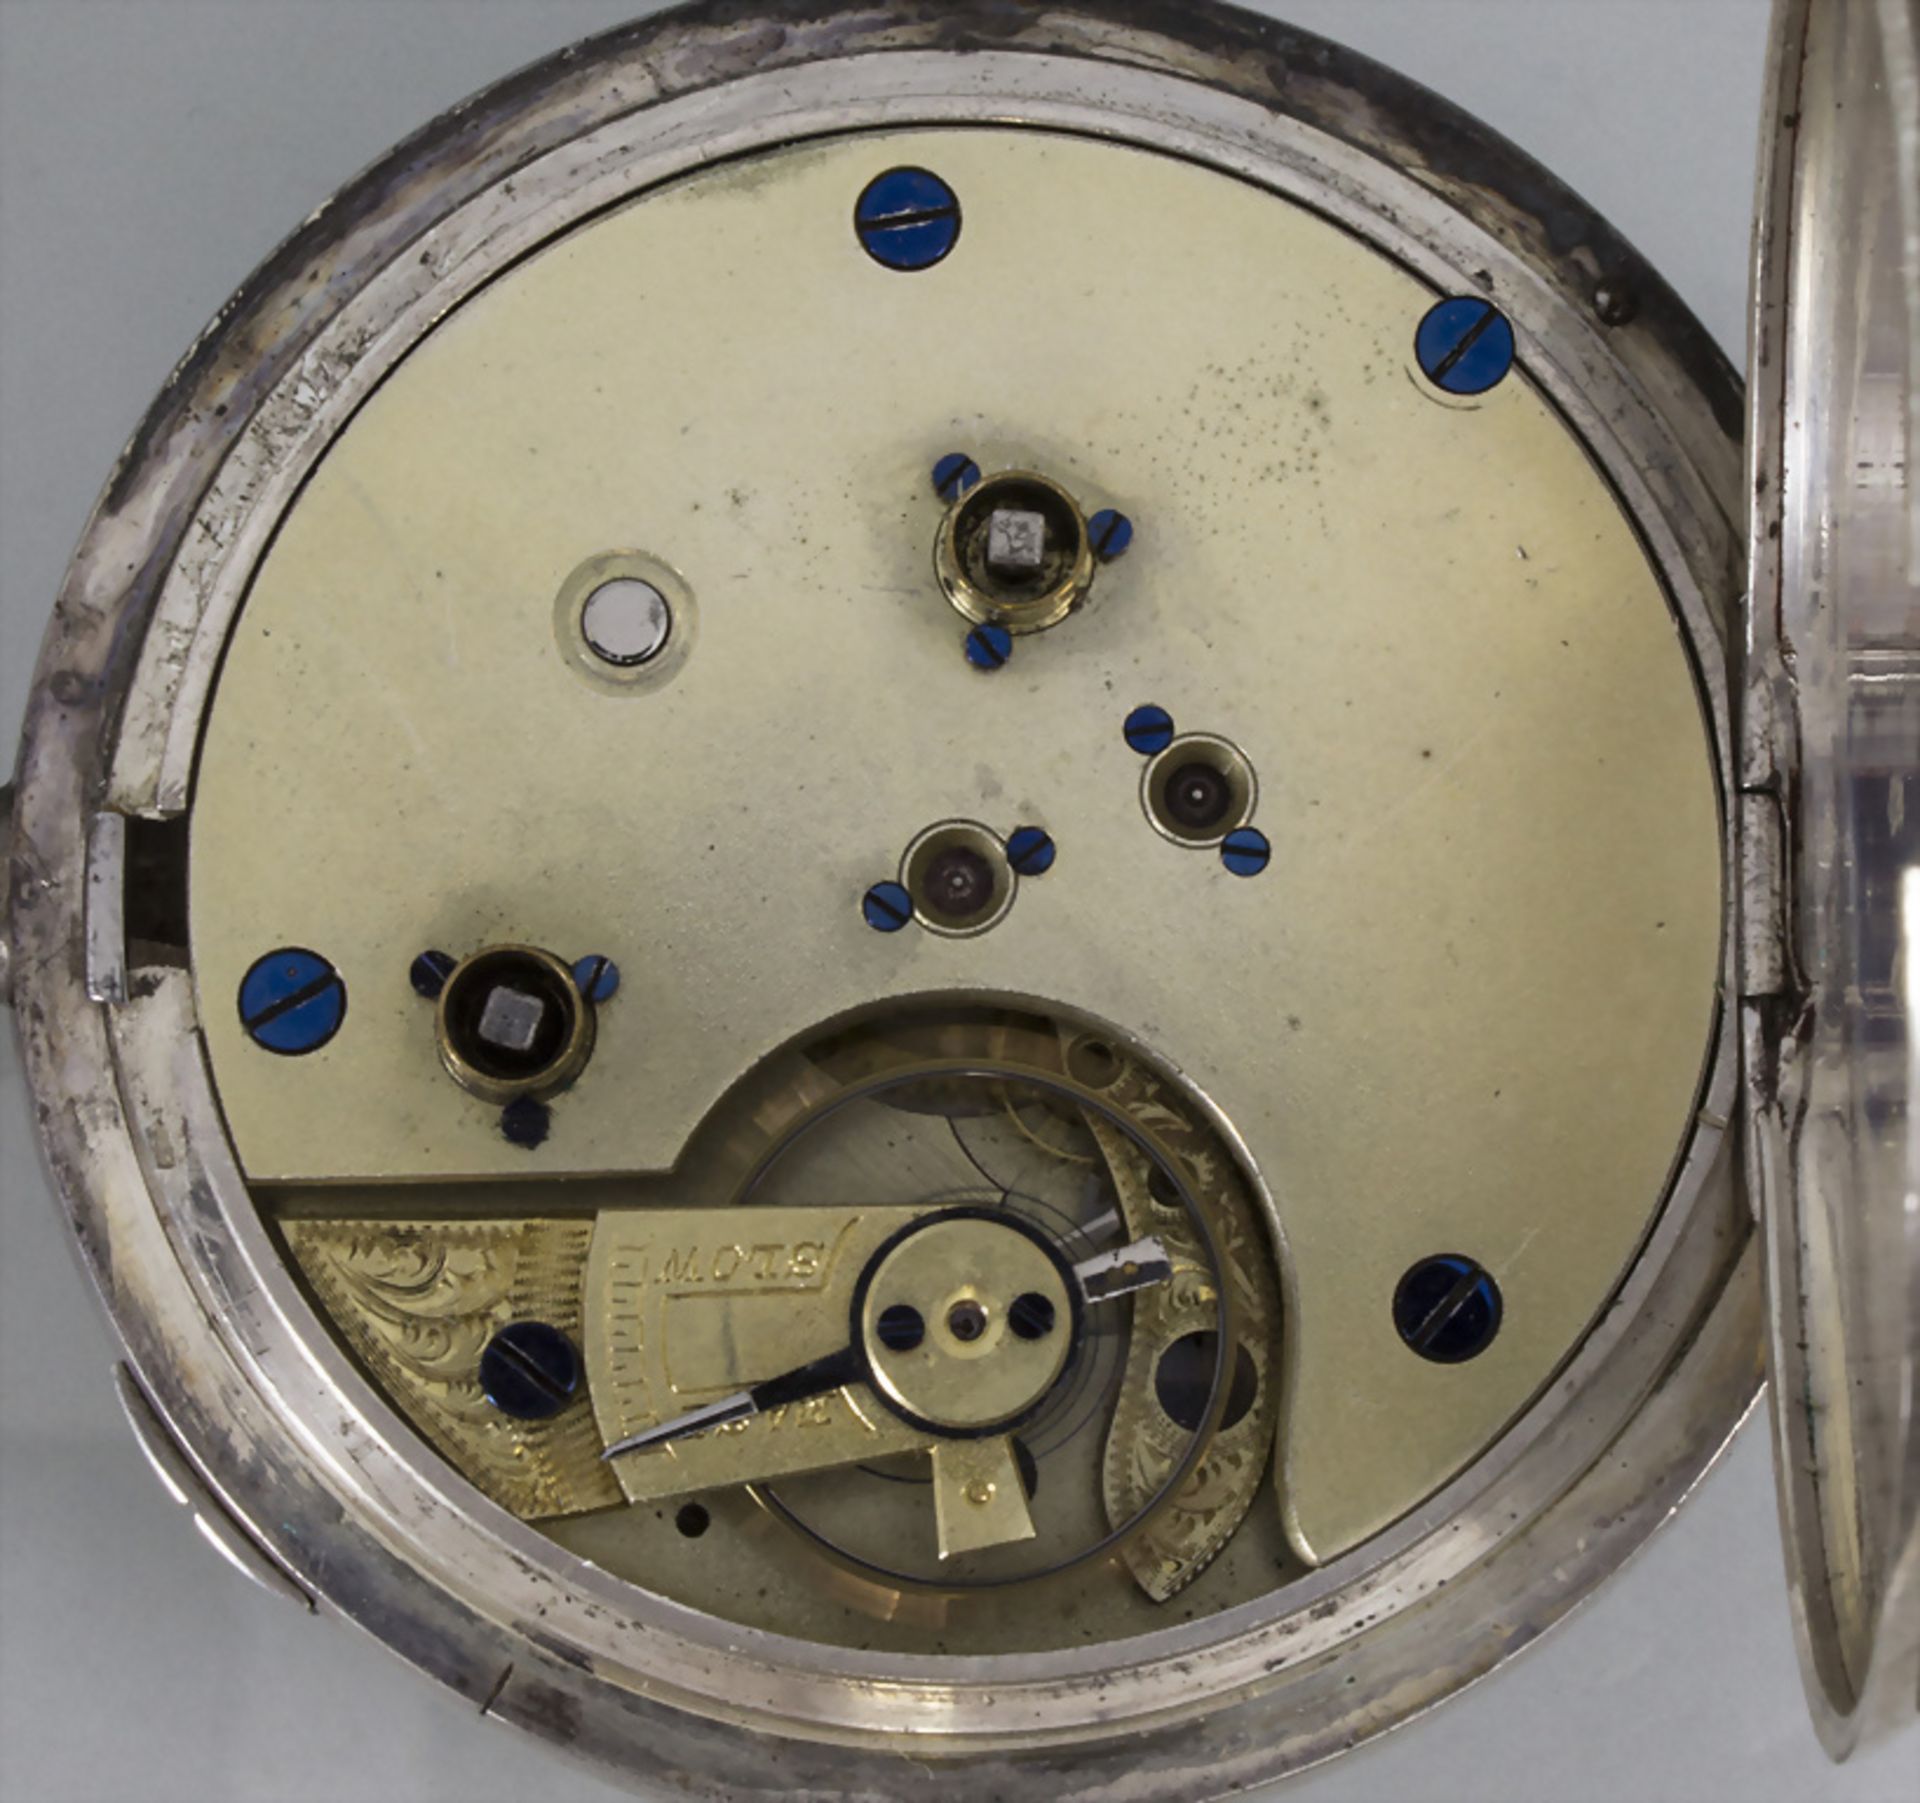 Taschenuhr mit Chronograph / A silver pocket watch with chronograph, Schweiz, 19. Jh. - Image 2 of 4